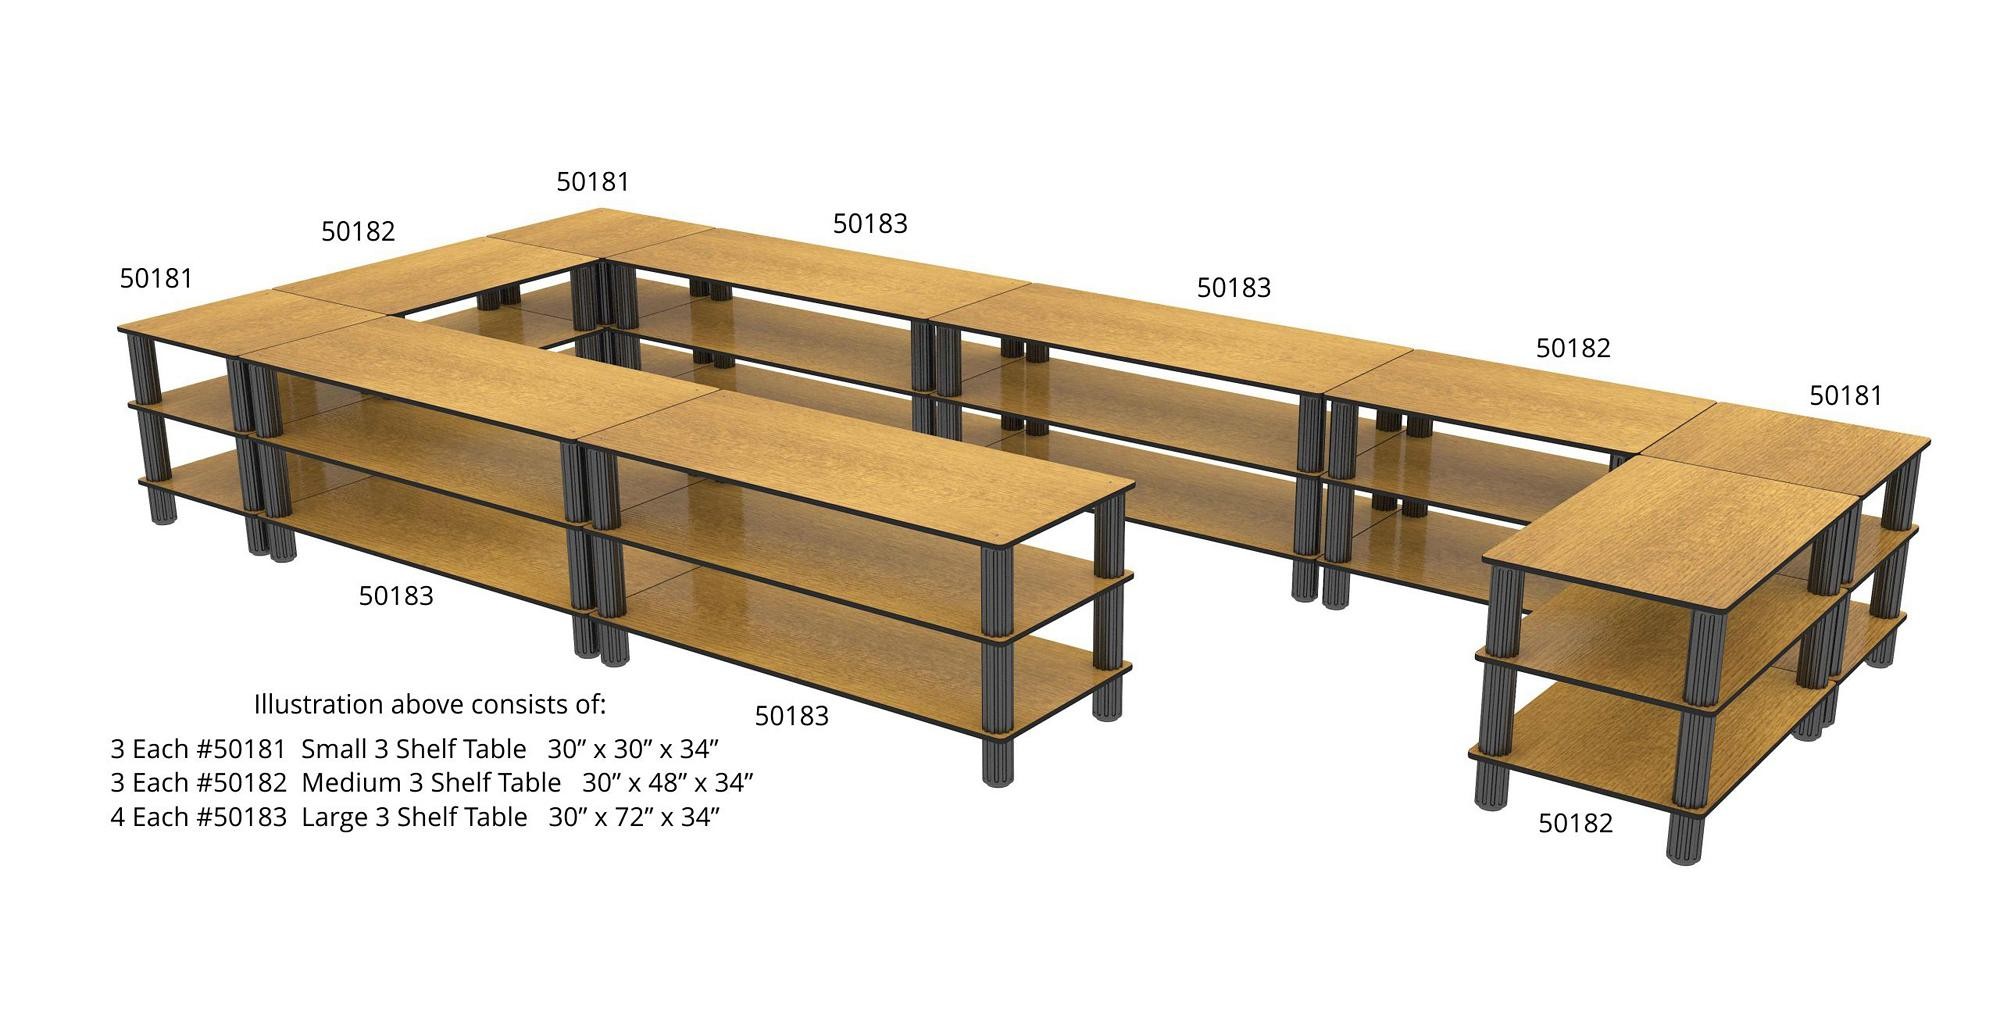 Bon Chef 50195WVWALNUT Small Corner Shelf Flex Table with Walnut Finish, 30" x 30" x 46"